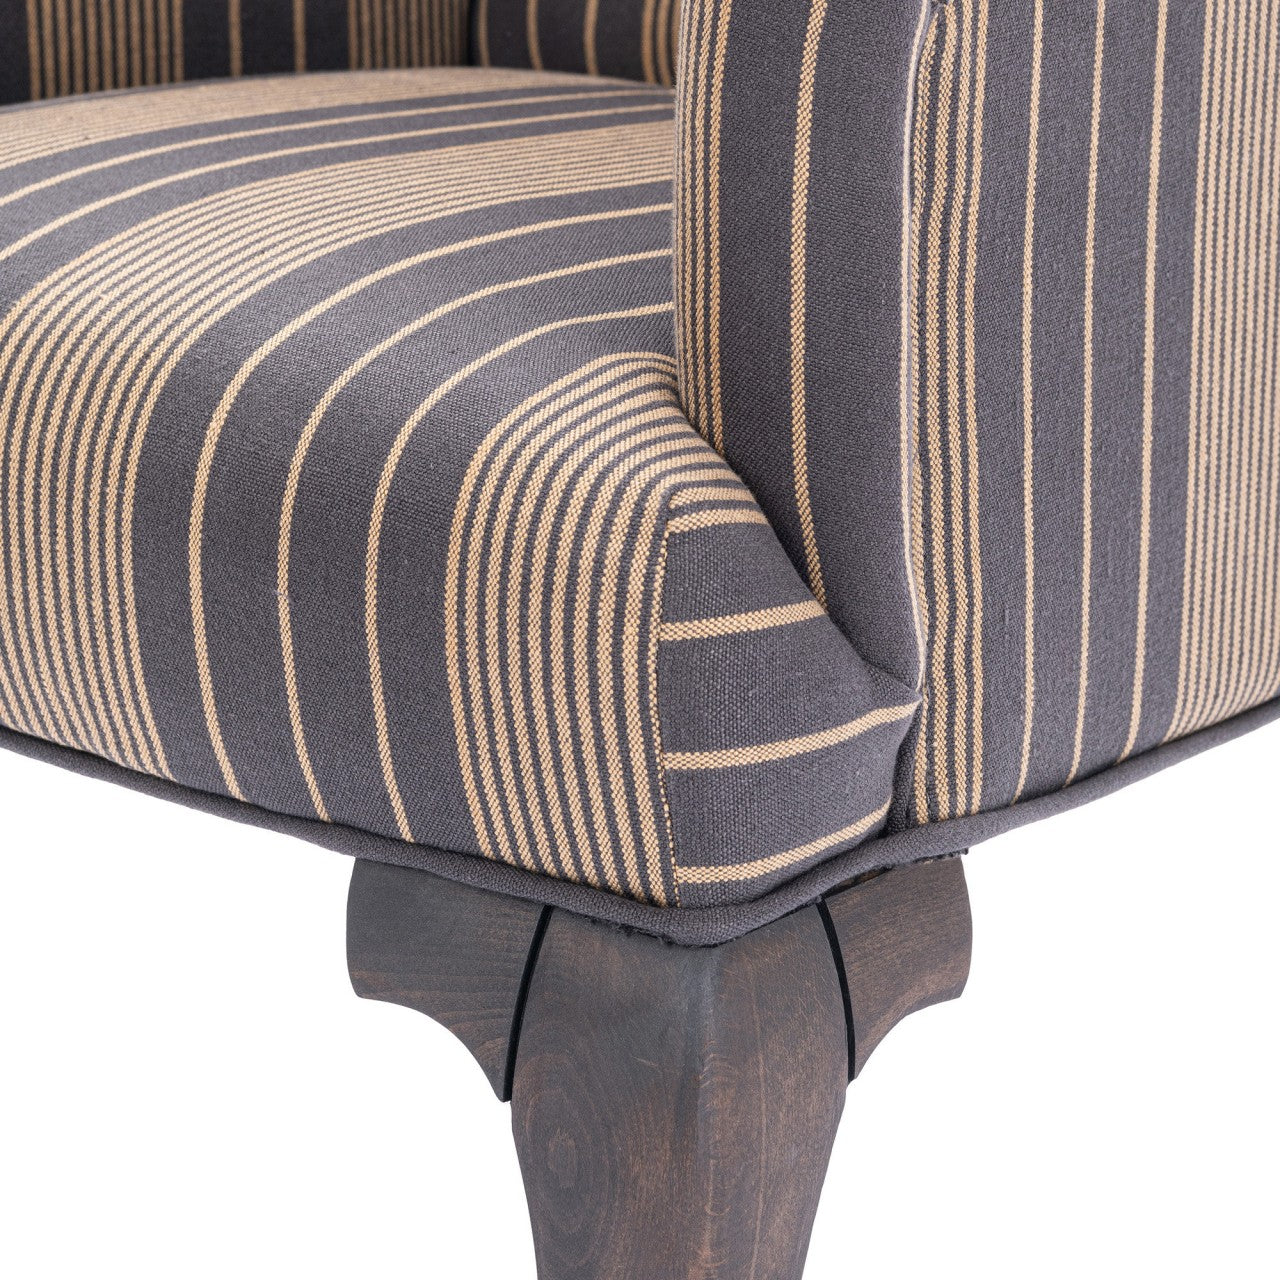 FITZROY TUFTED CHAIR - NEWPORT STRIPES Heavy Linen Fabric_Furniture_Mindthegap